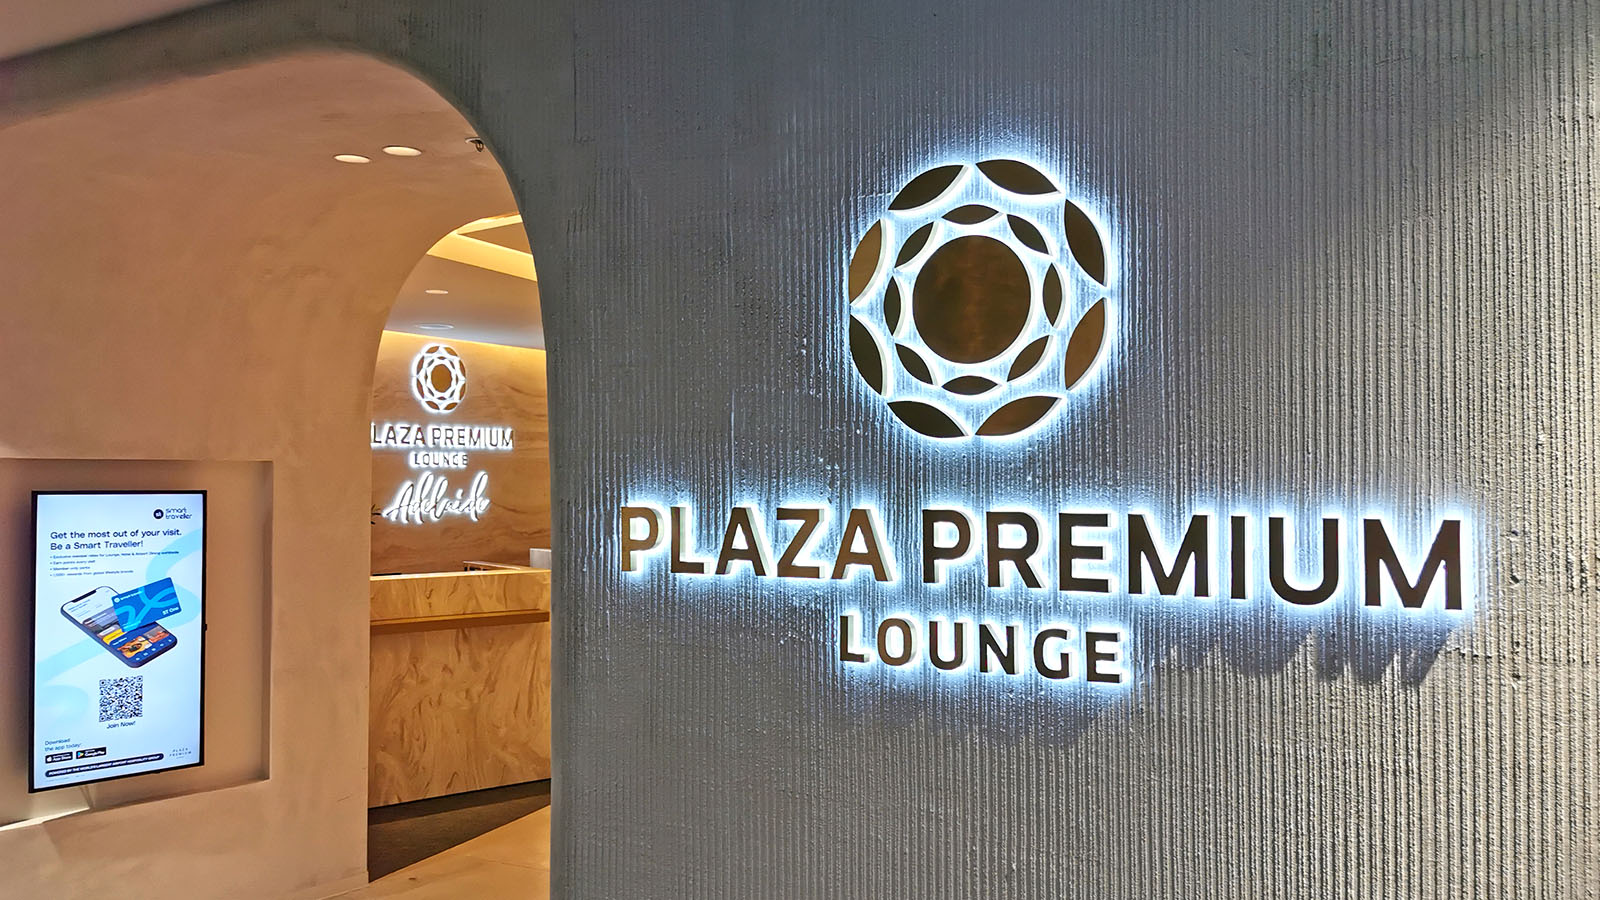 Signage for the Plaza Premium Lounge, Adelaide